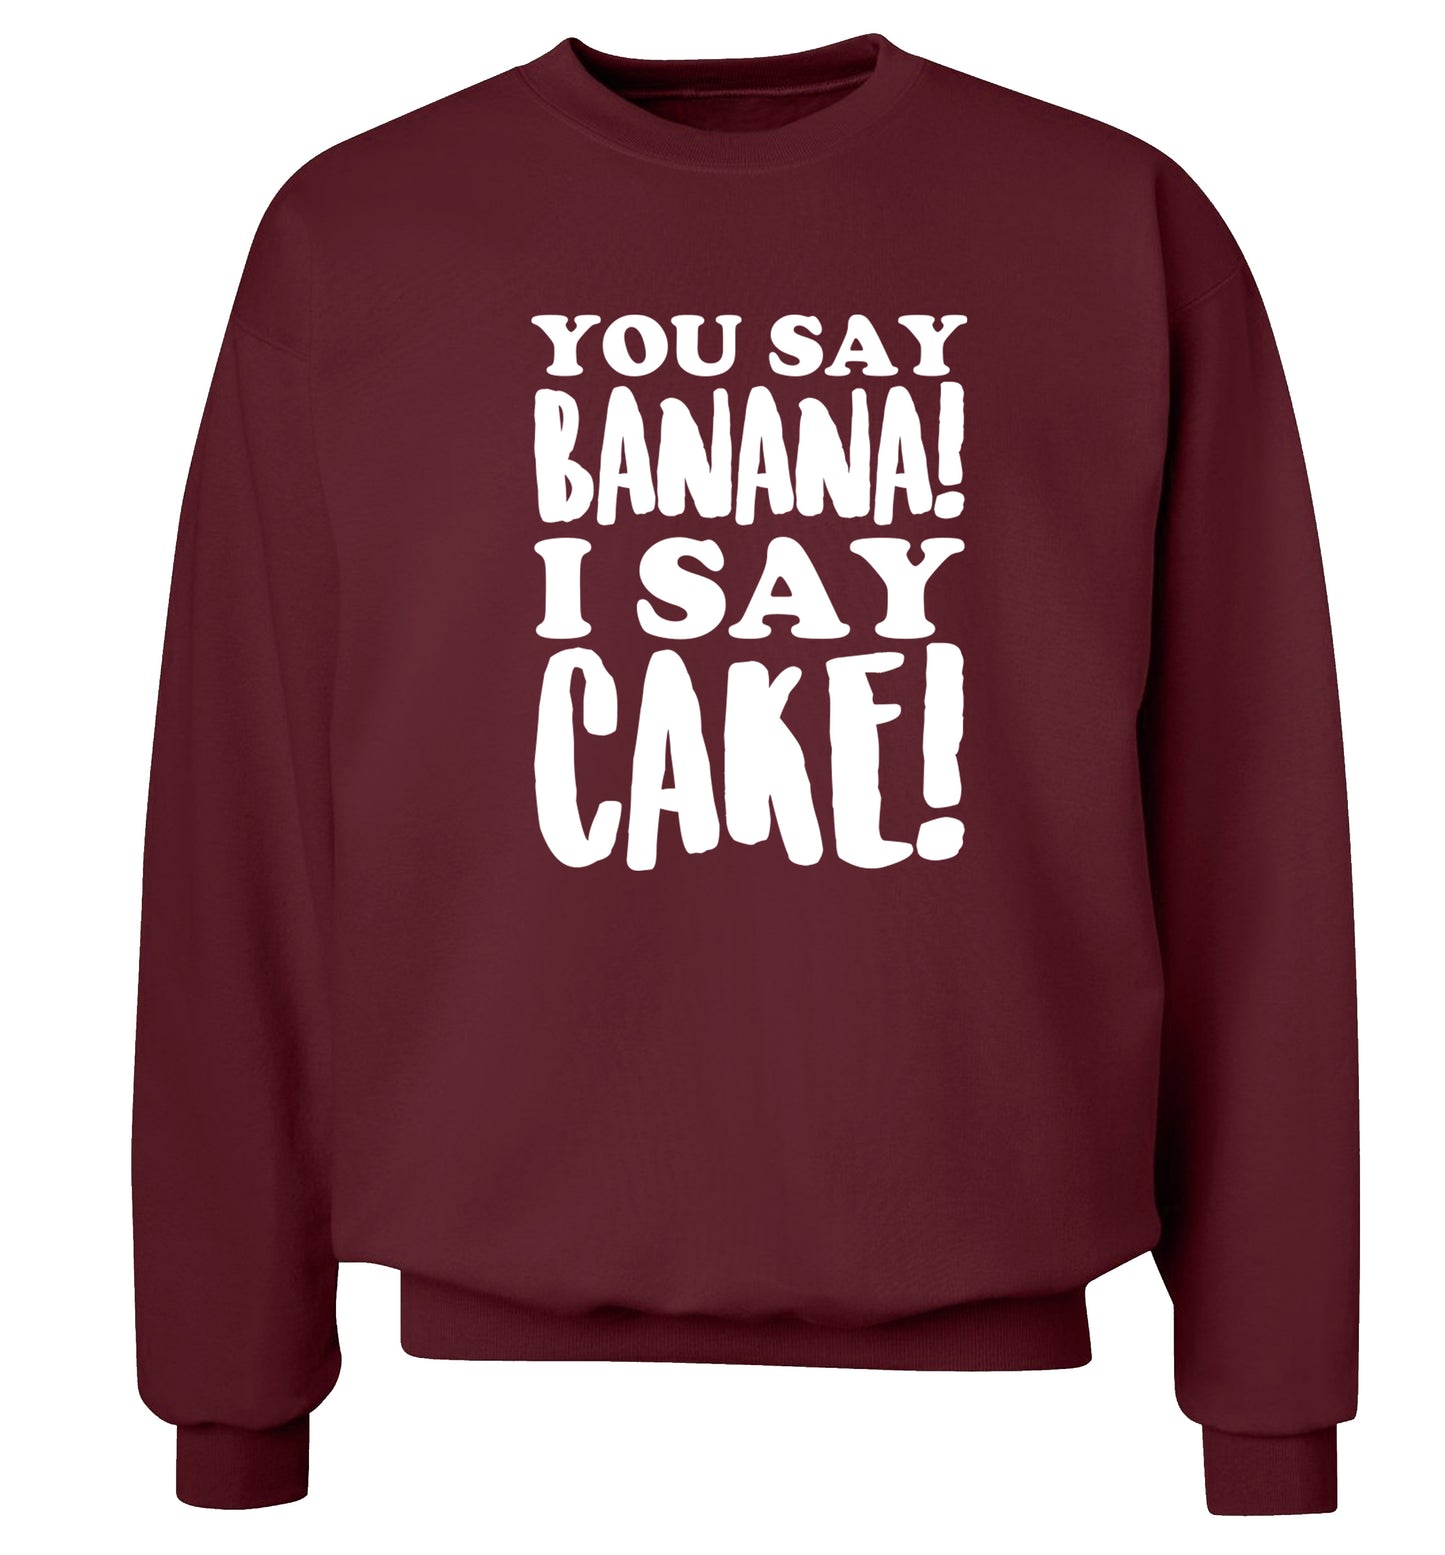 You say banana I say cake! Adult's unisex maroon Sweater 2XL